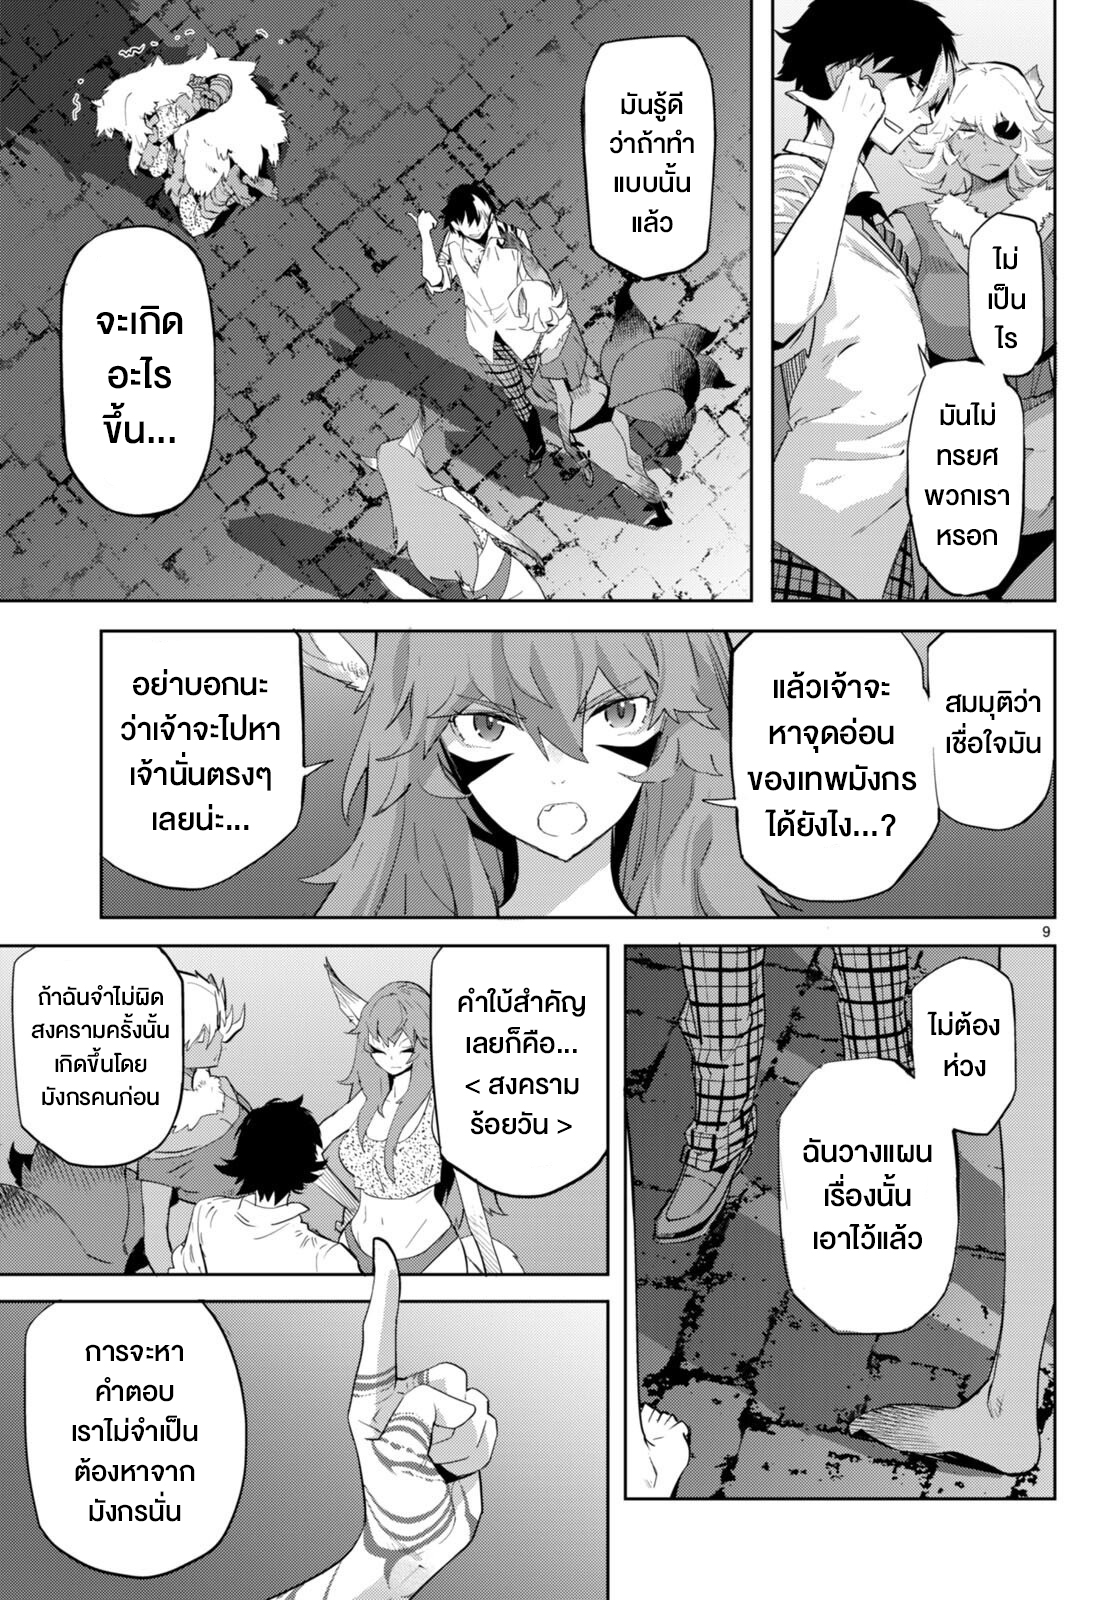 9 rose manga